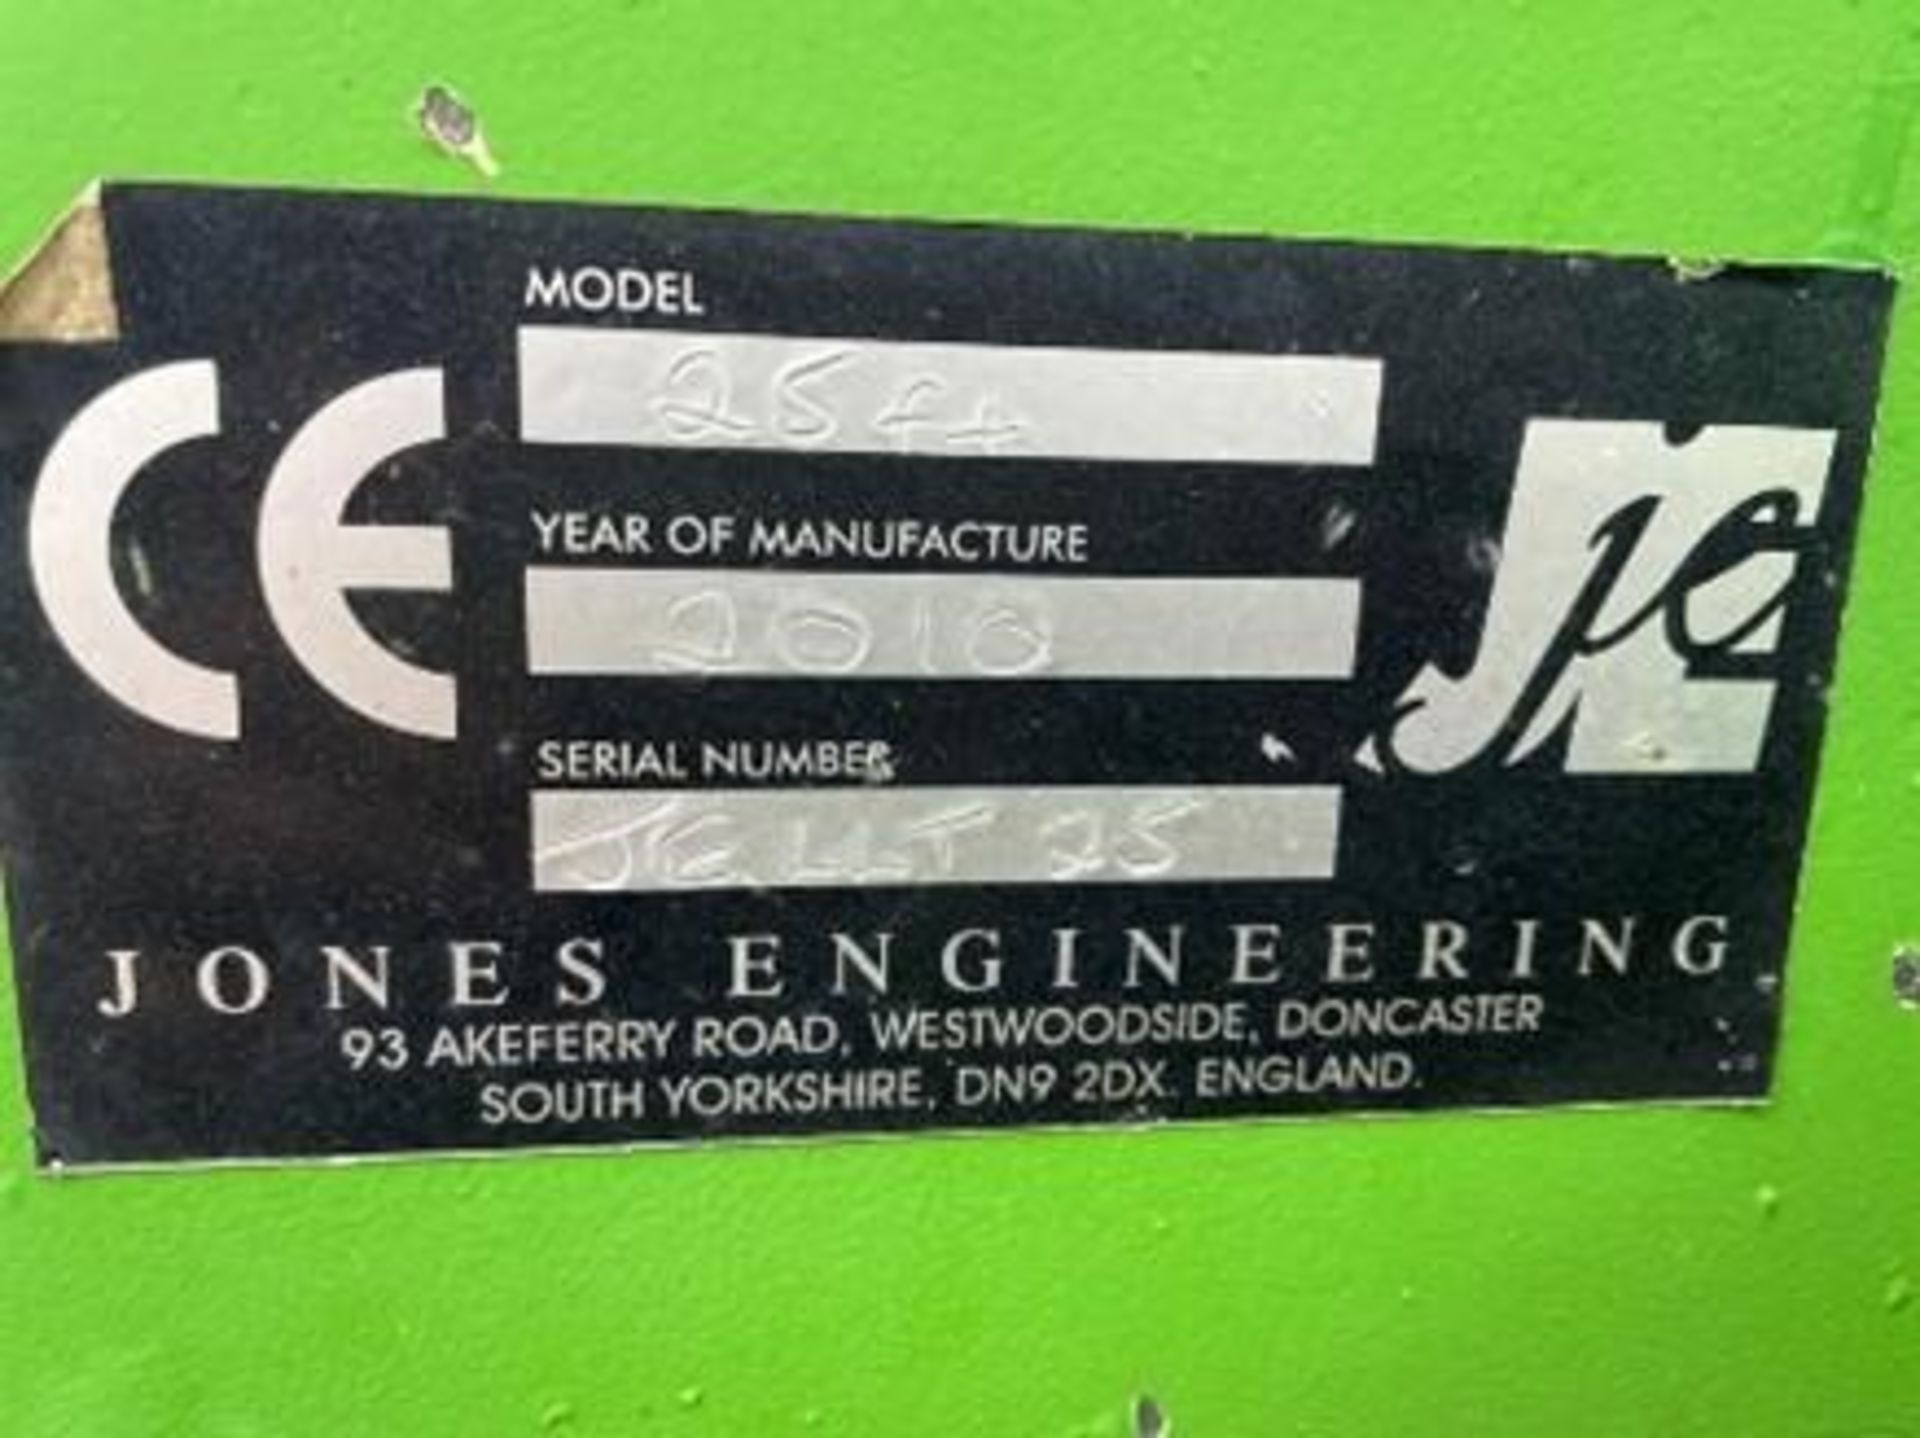 2010 Jones Engineering Drill Trailer - (Cambridgeshire) - Image 2 of 3